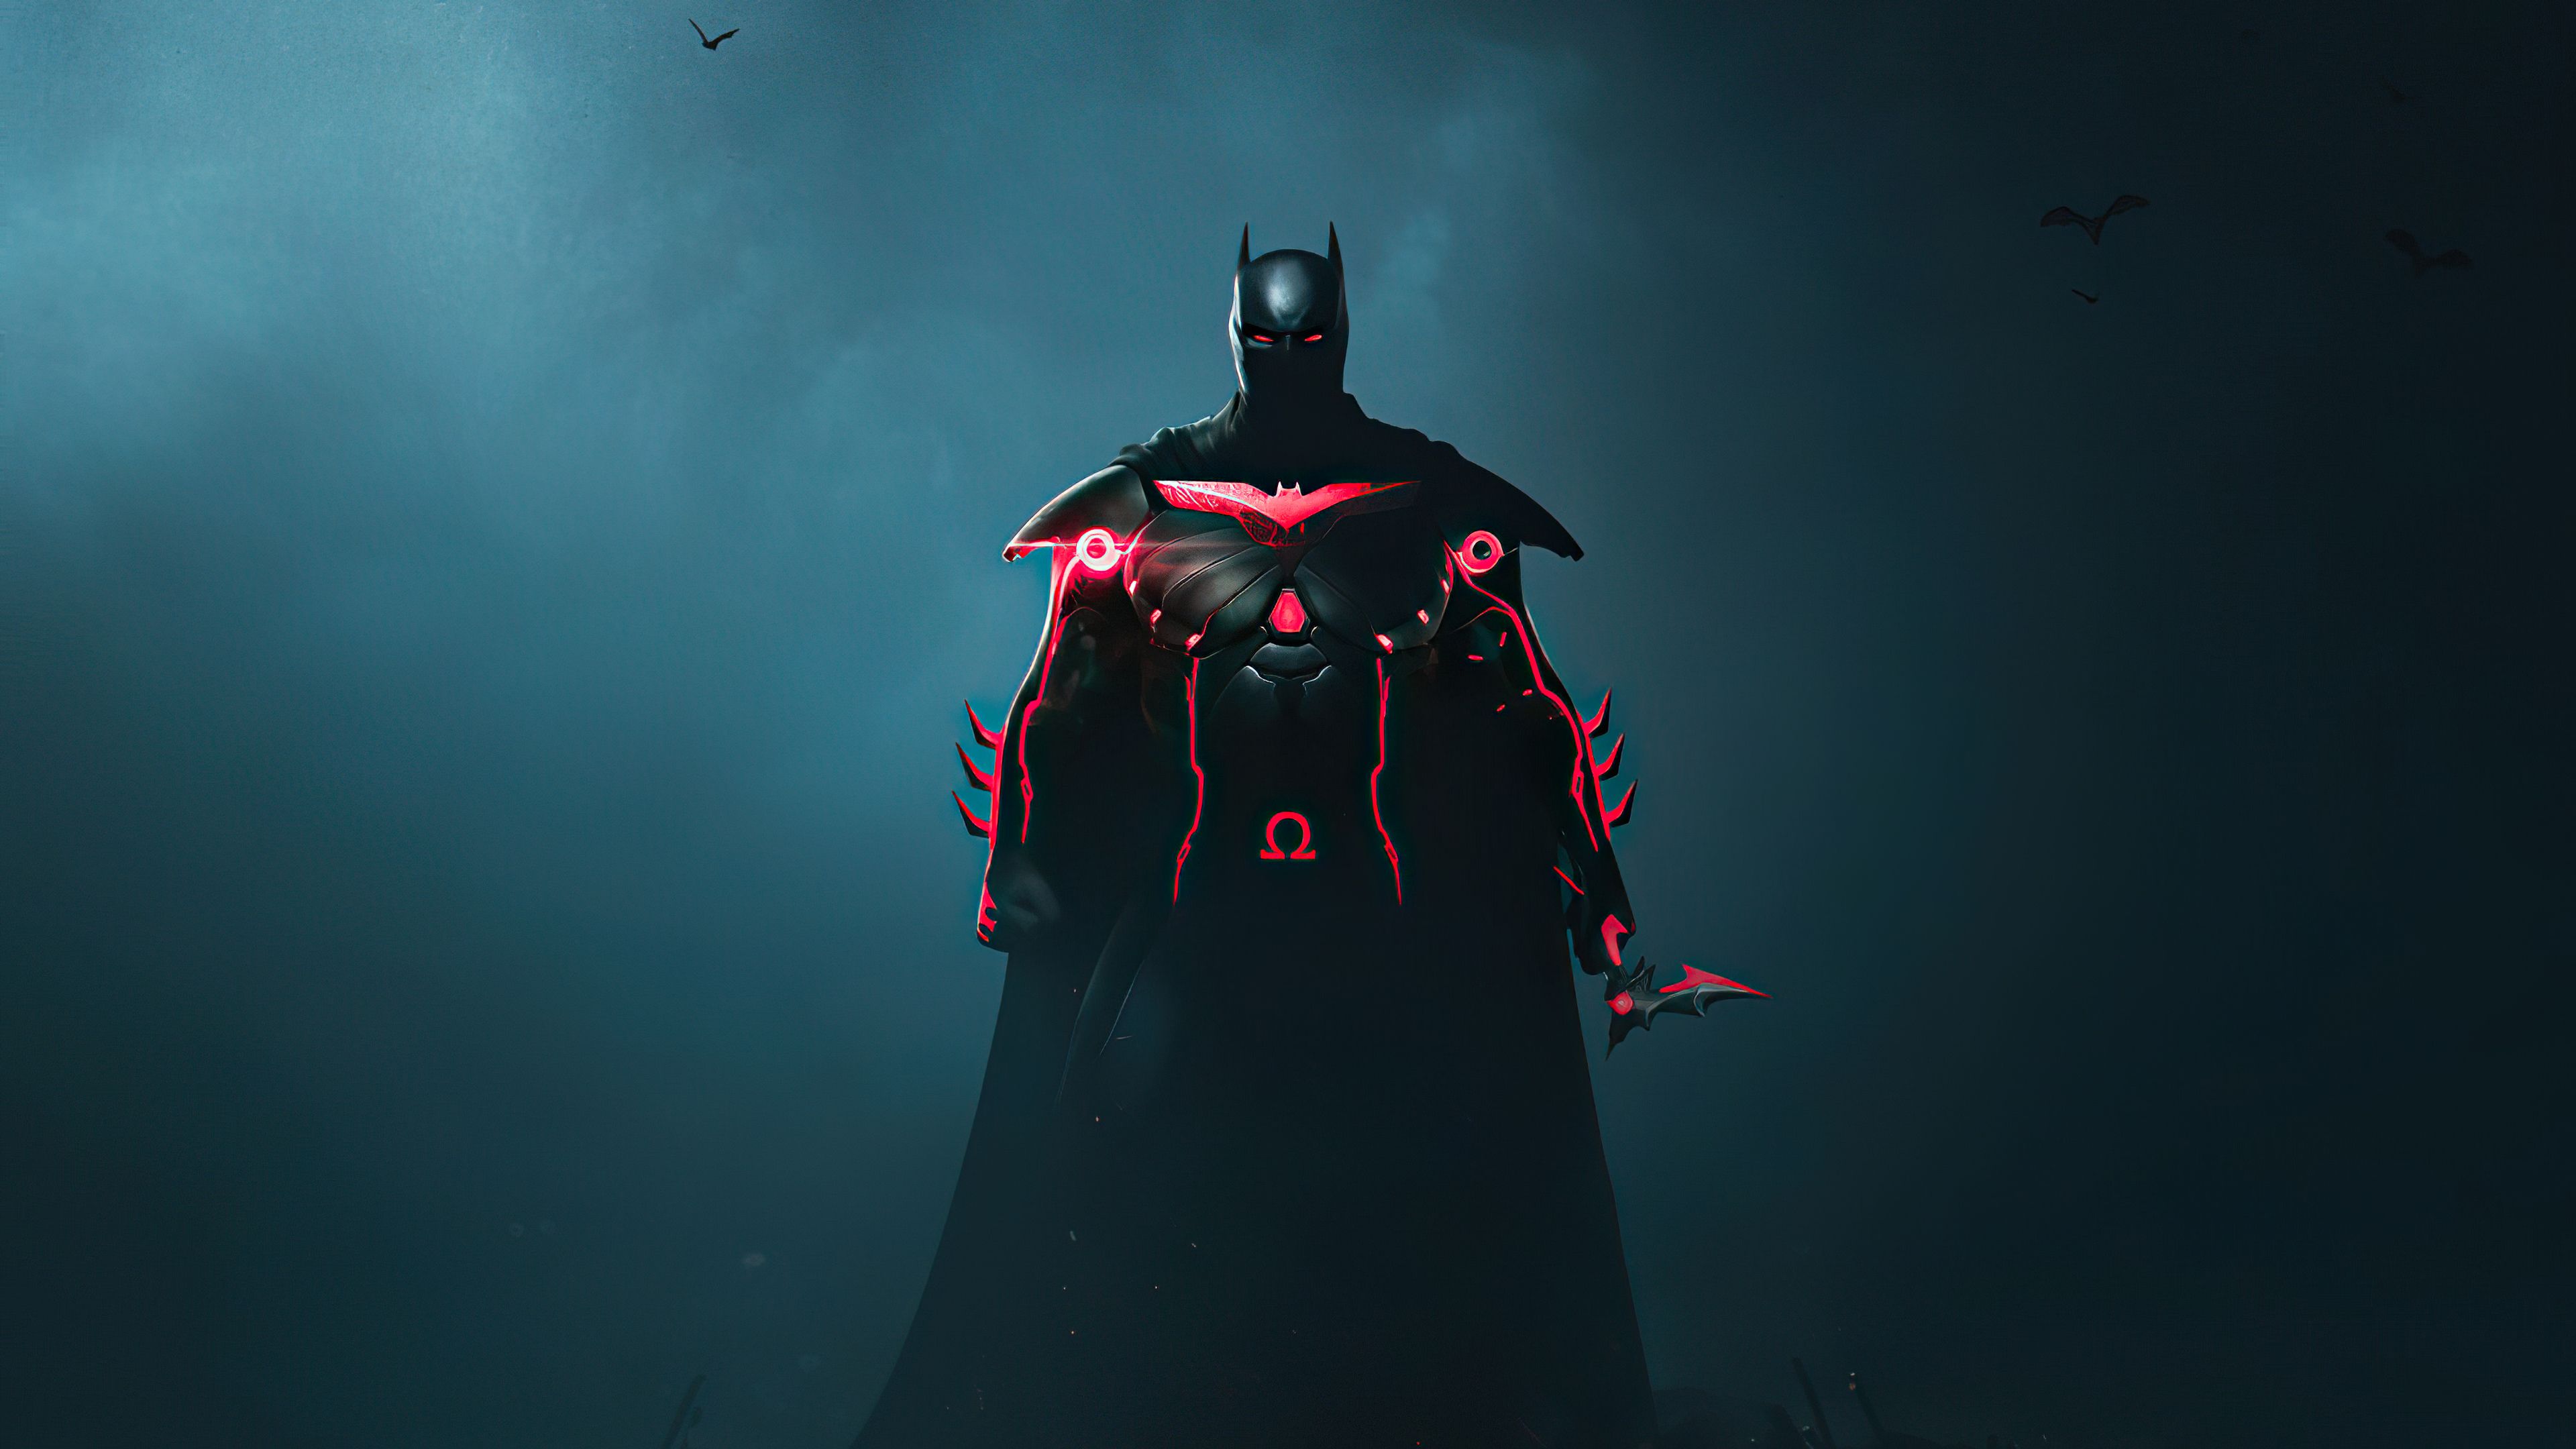 Batman x Cyberpunk Wallpaper, HD Superheroes 4K Wallpaper, Image, Photo and Background